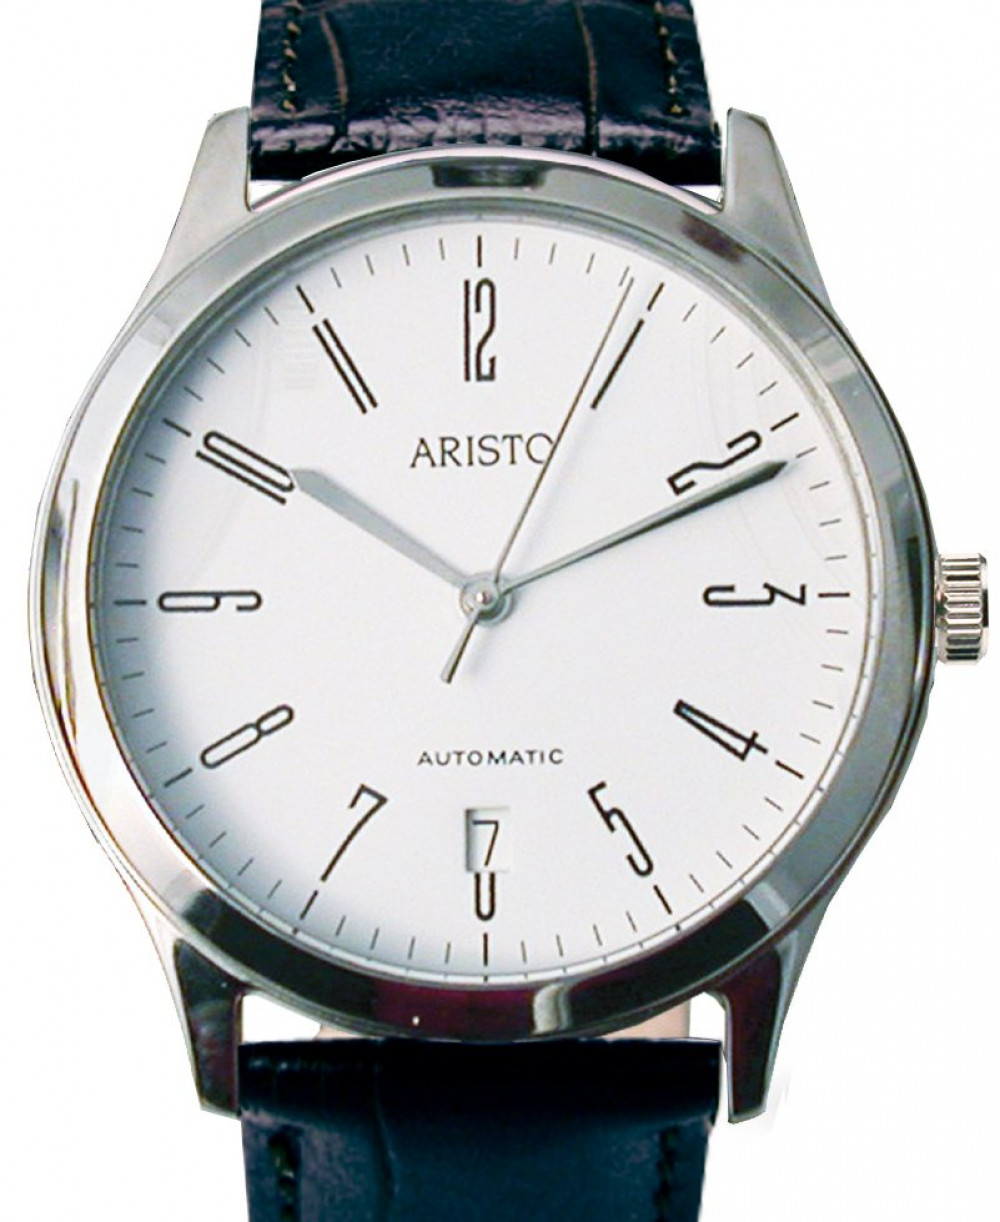 Zegarek firmy Aristo, model Dessau